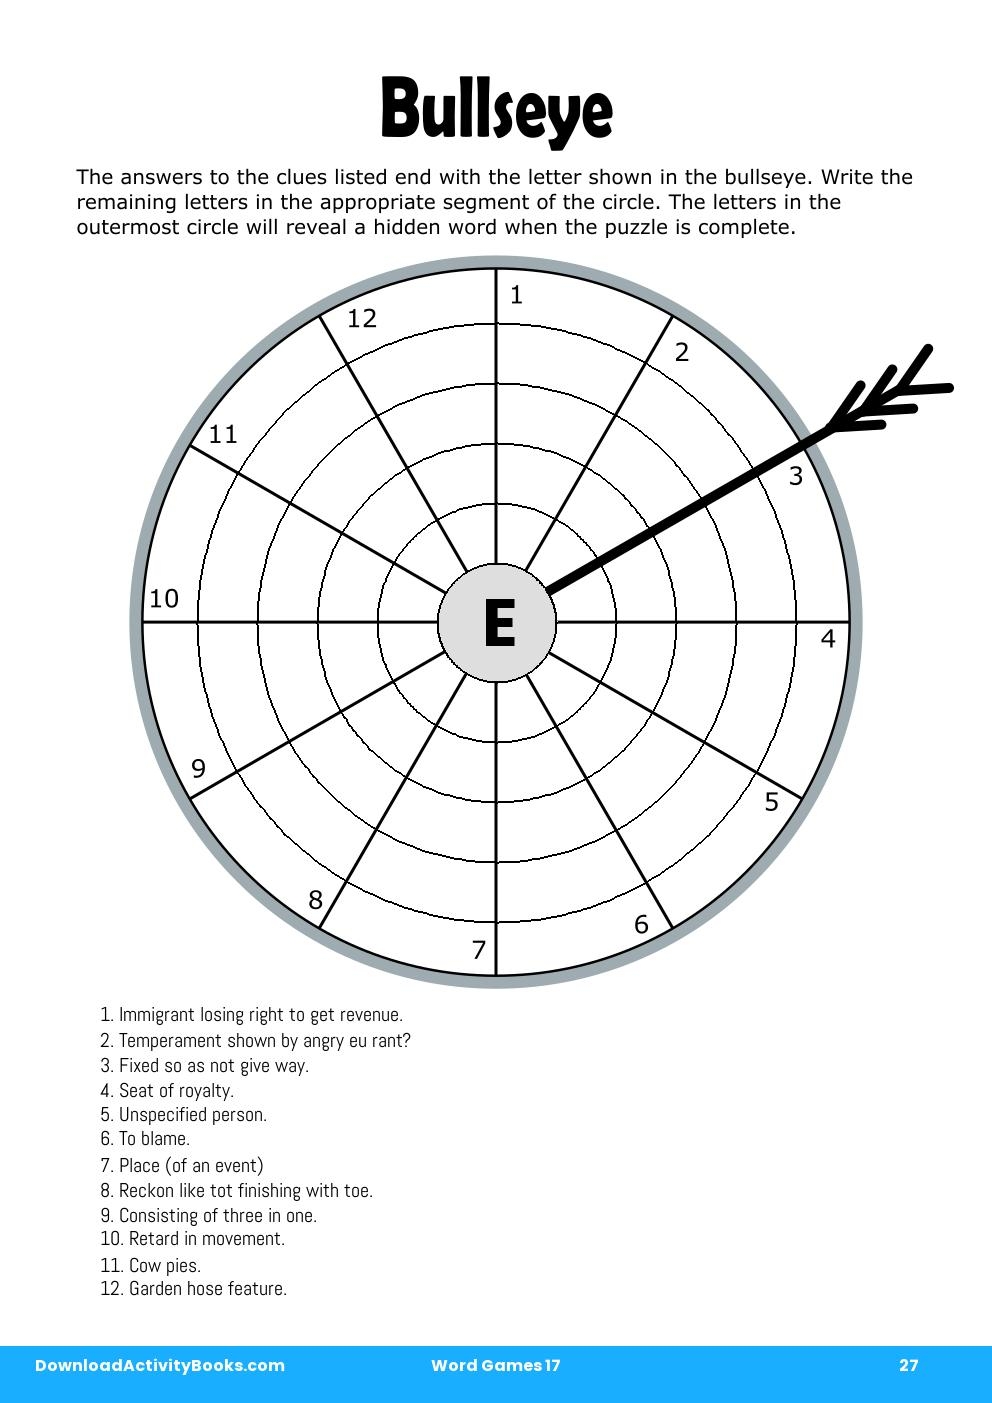 Bullseye in Word Games 17